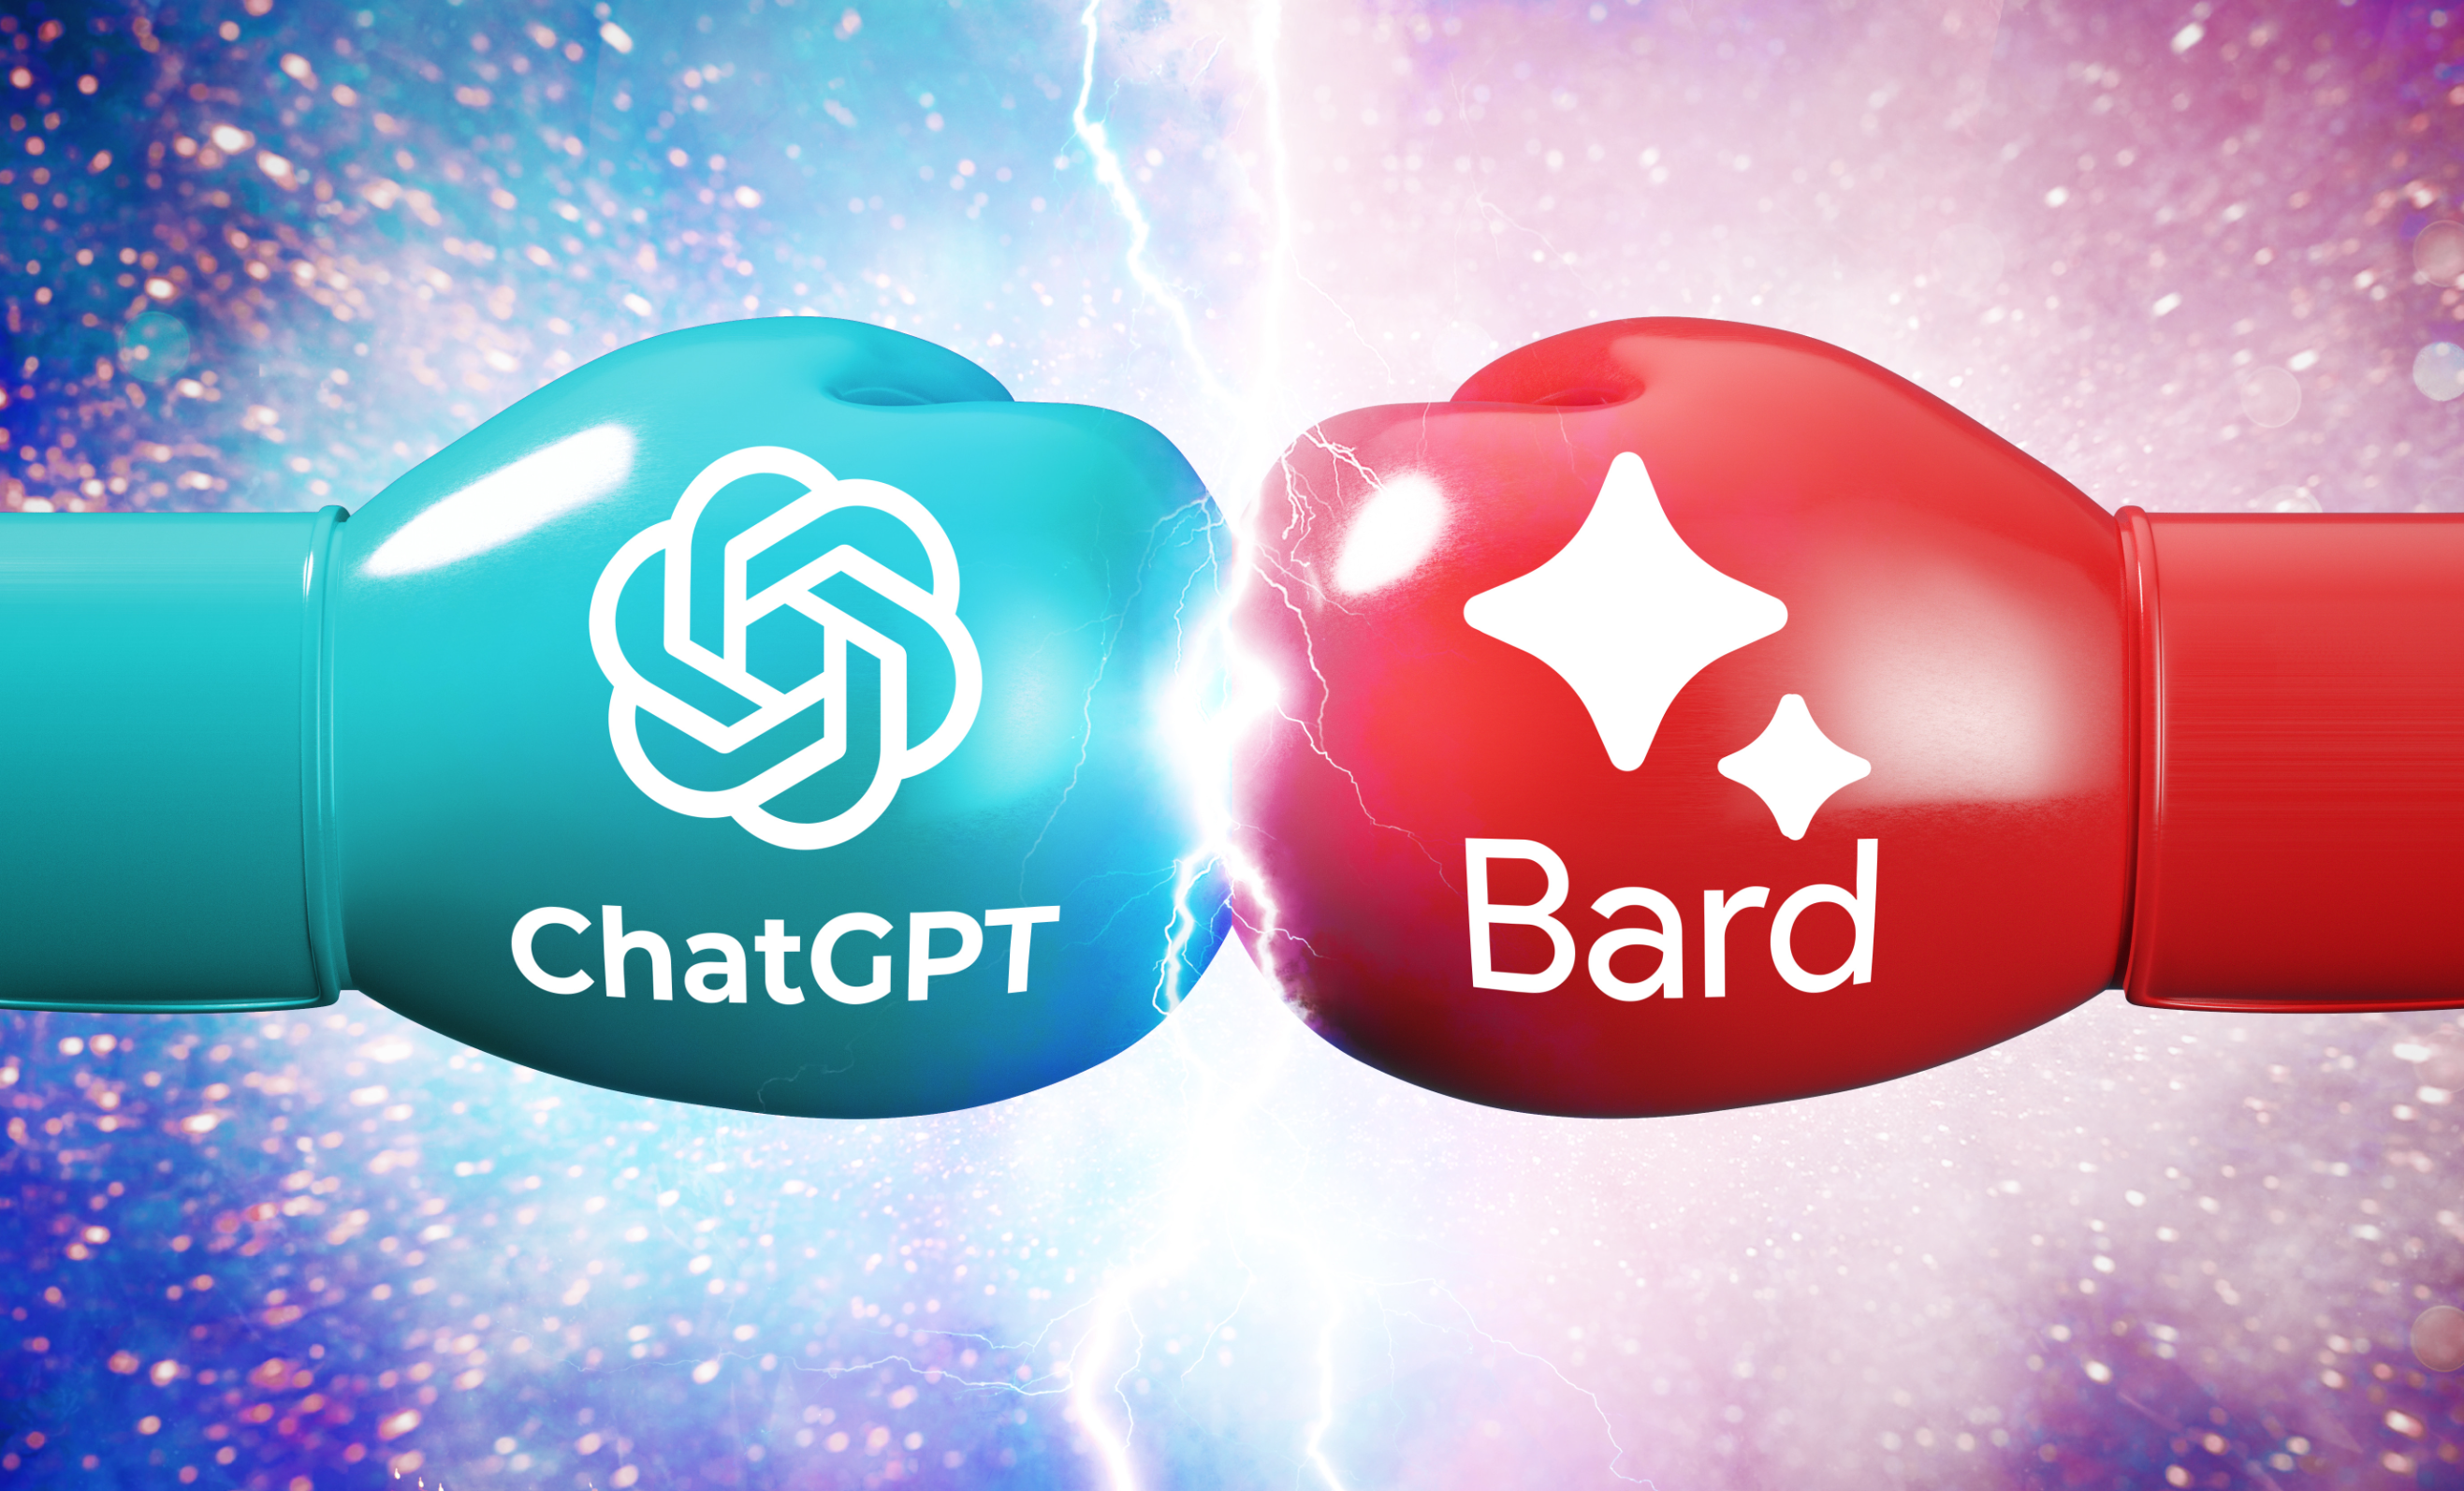 Is Google Bard better than ChatGPT